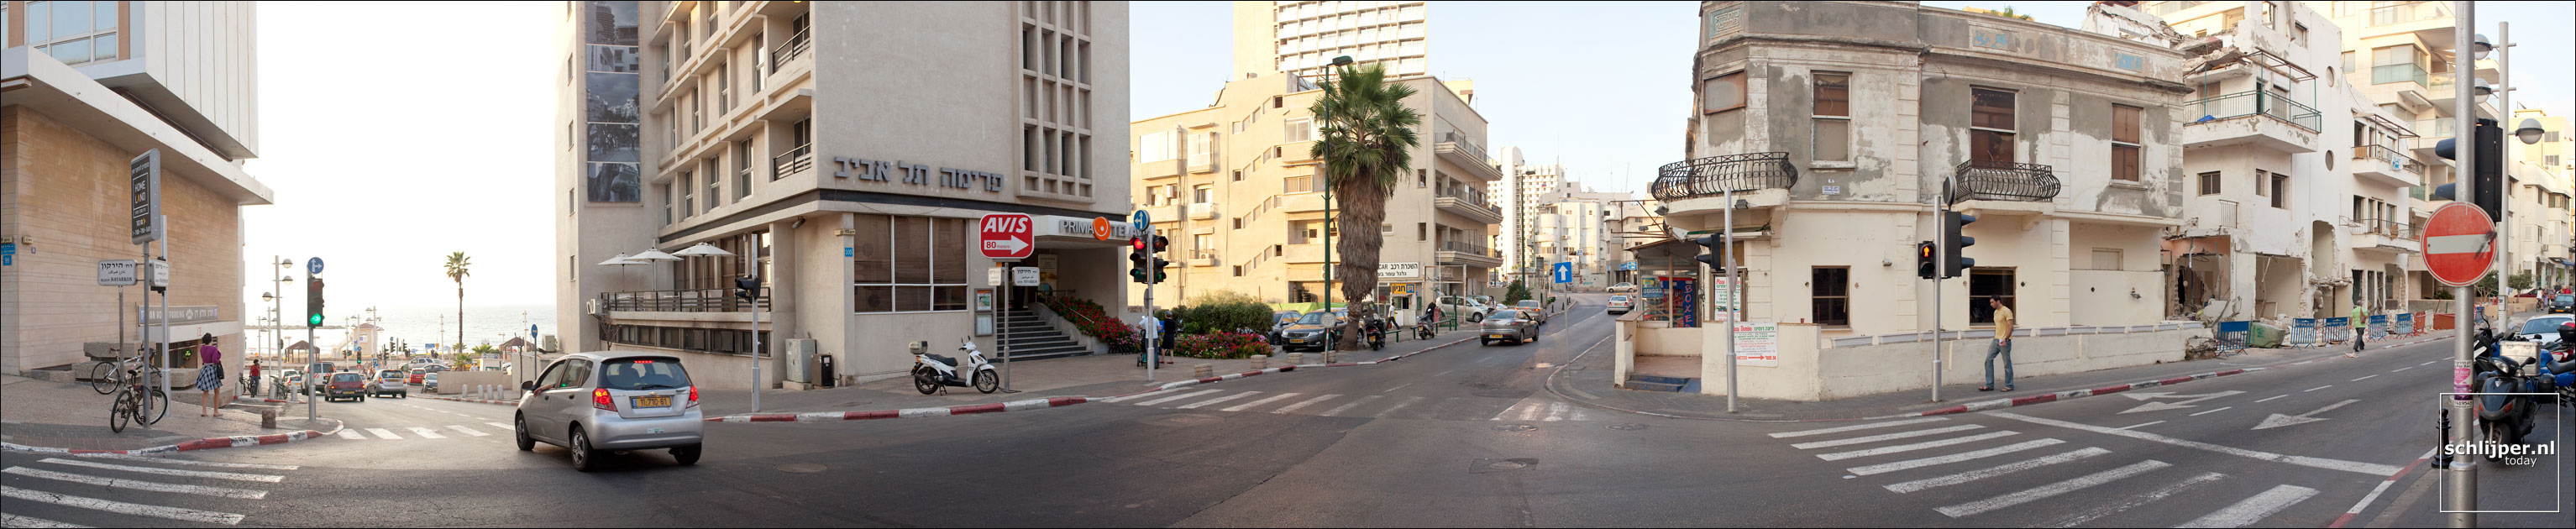 Israel, Tel Aviv, 17 november 2010